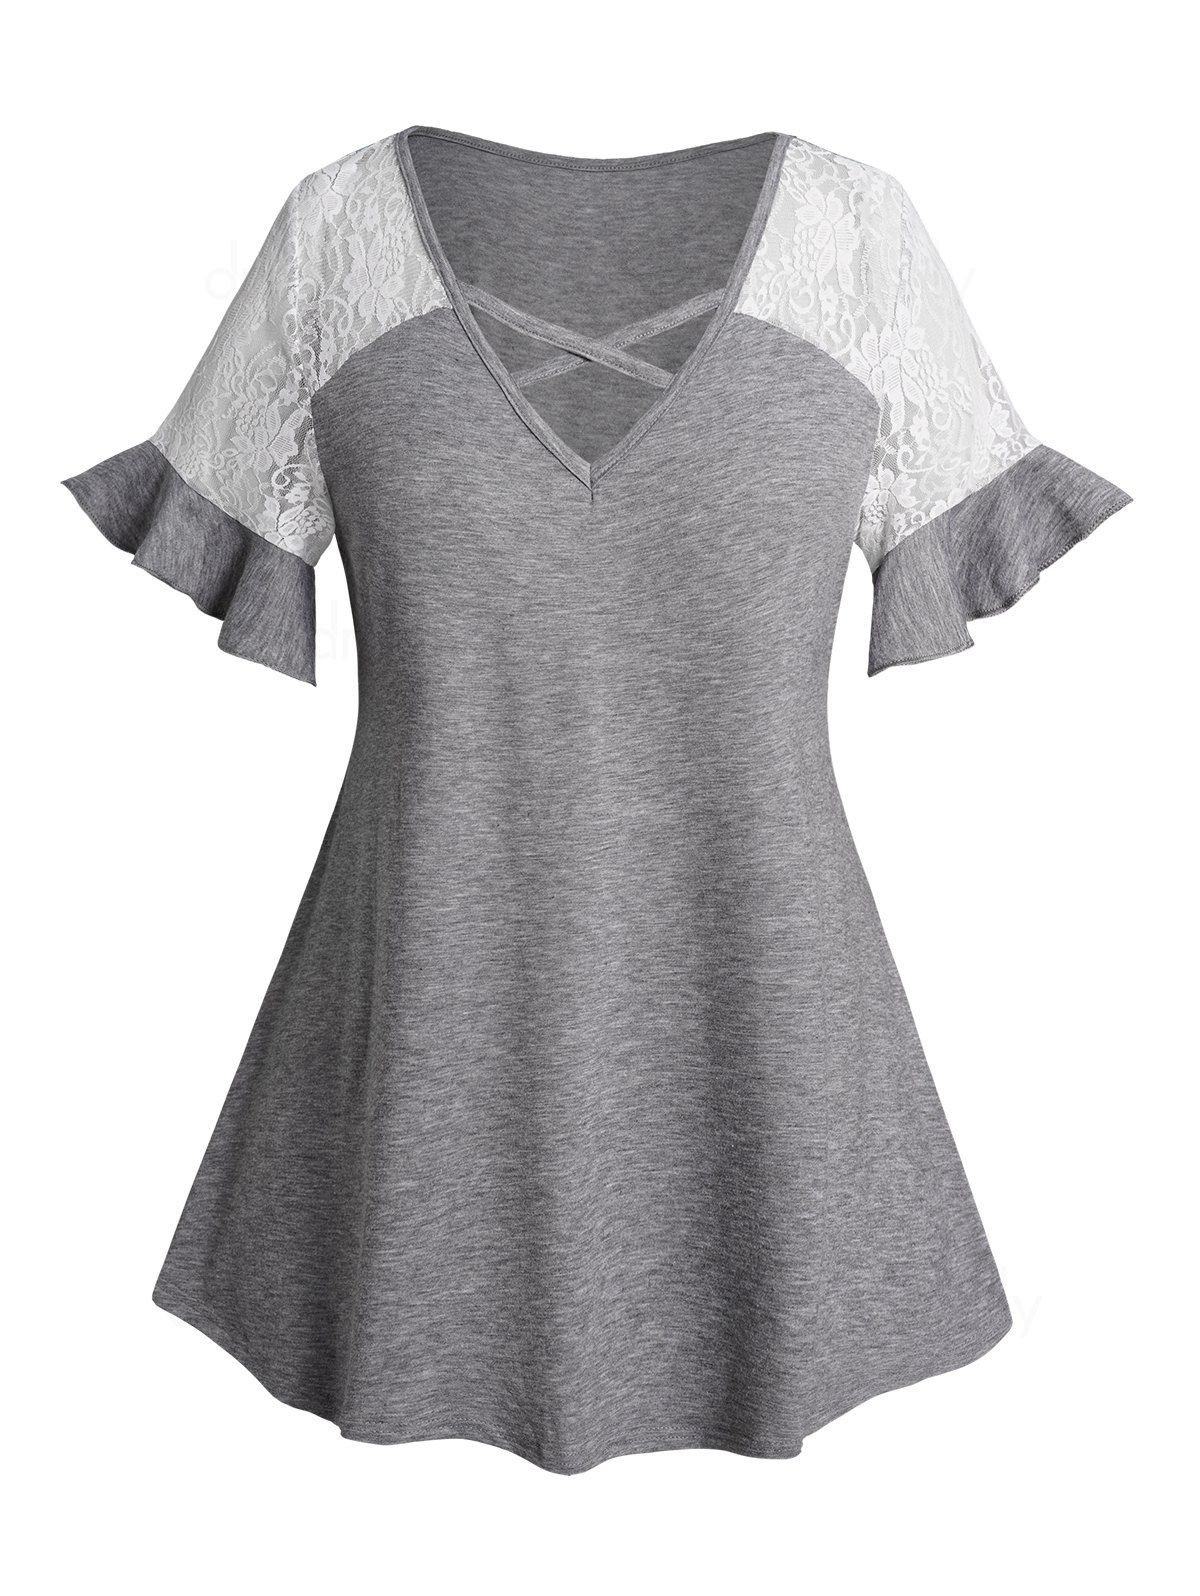 Dresslily Plus Size Lace Ruffle T Shirt Crisscross V Neck Casual Top